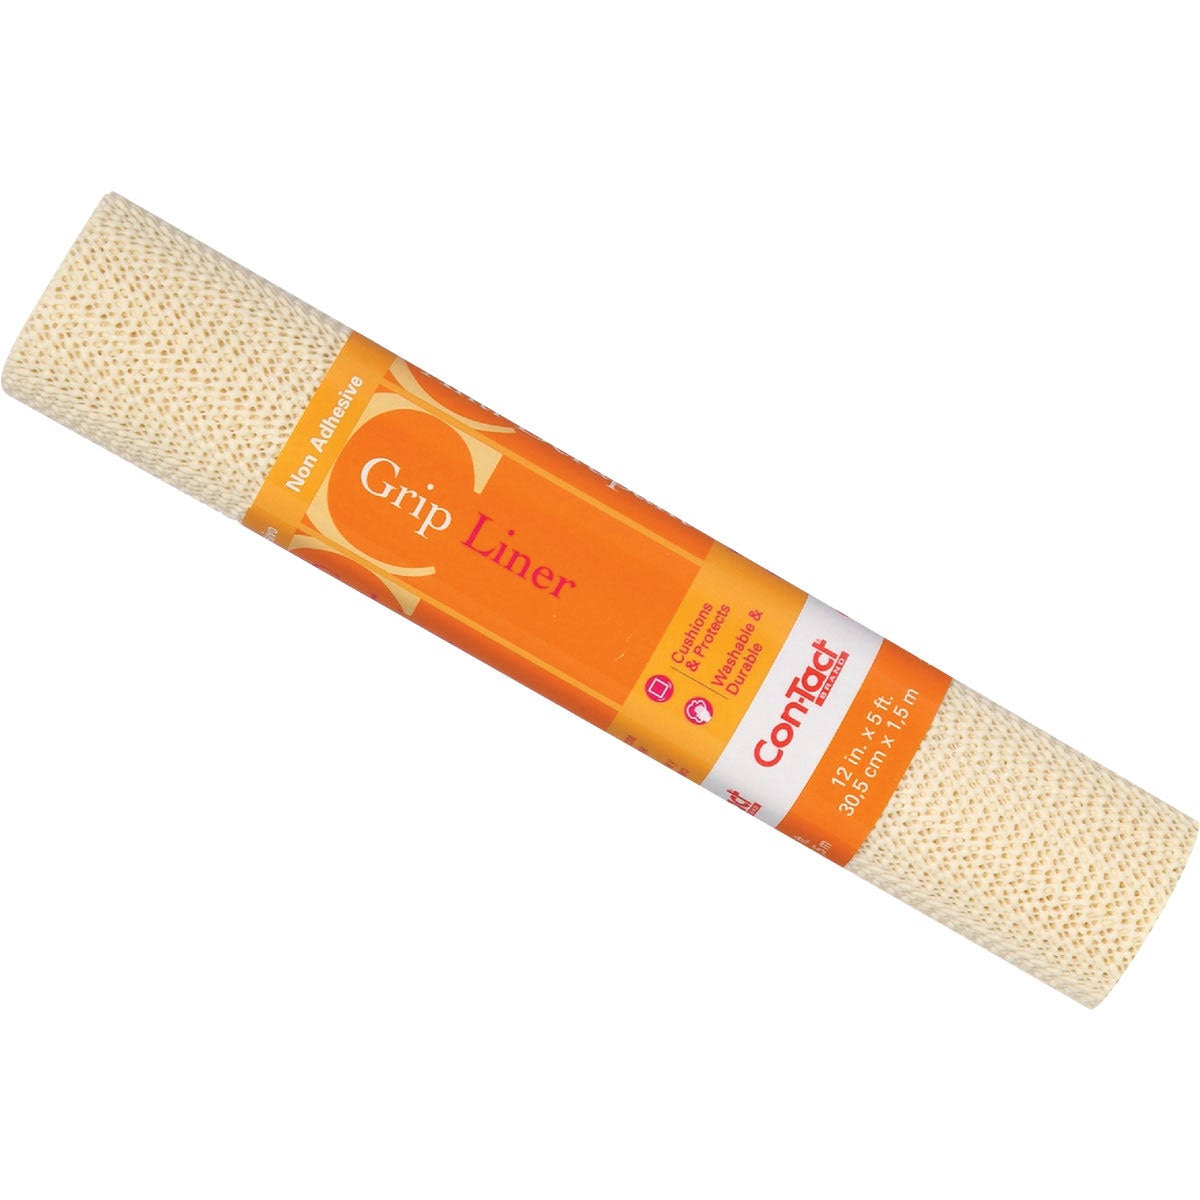 Con-Tact Brand Grip Shelf Liner - Almond